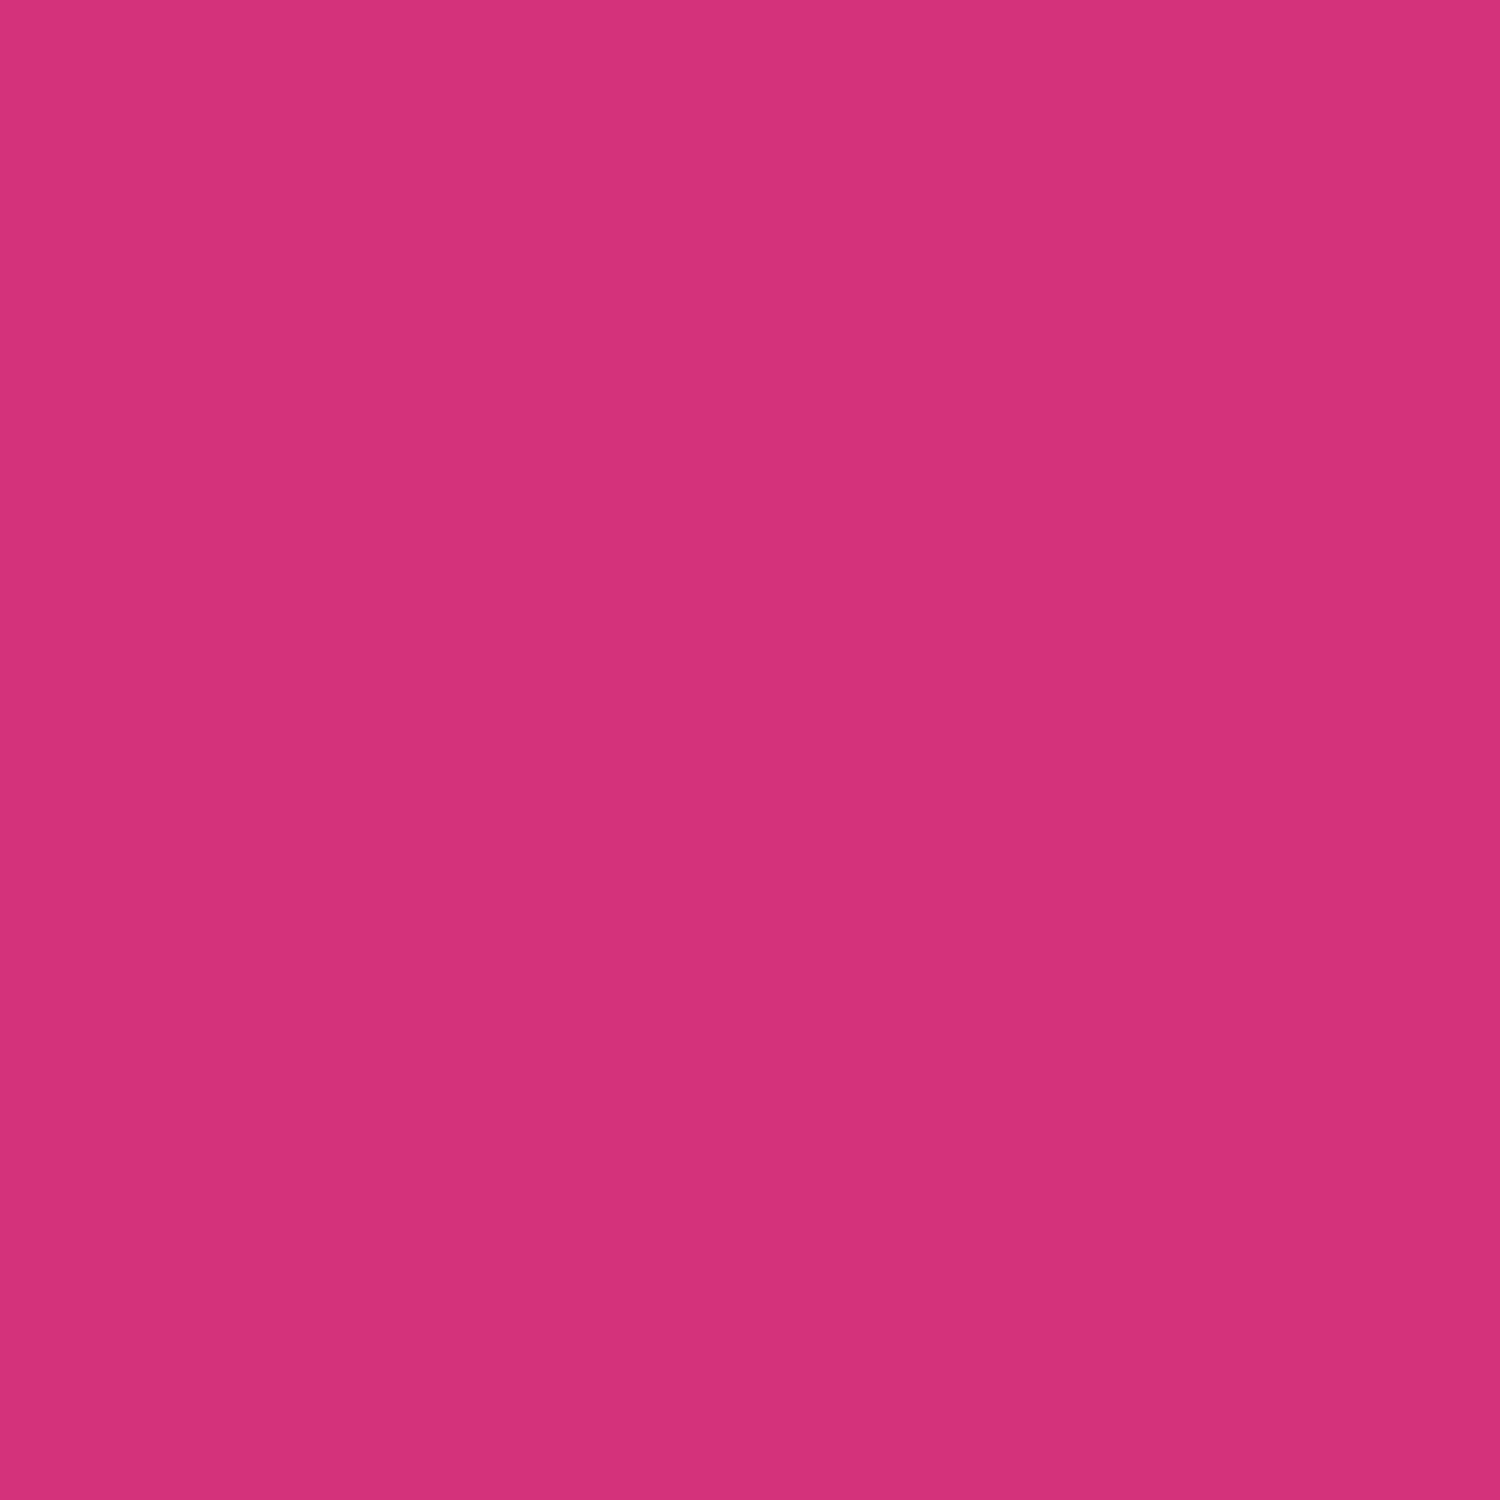 Tulip Permanent Fabric Dye, Bright Pink, 1 Pack, 1.76oz